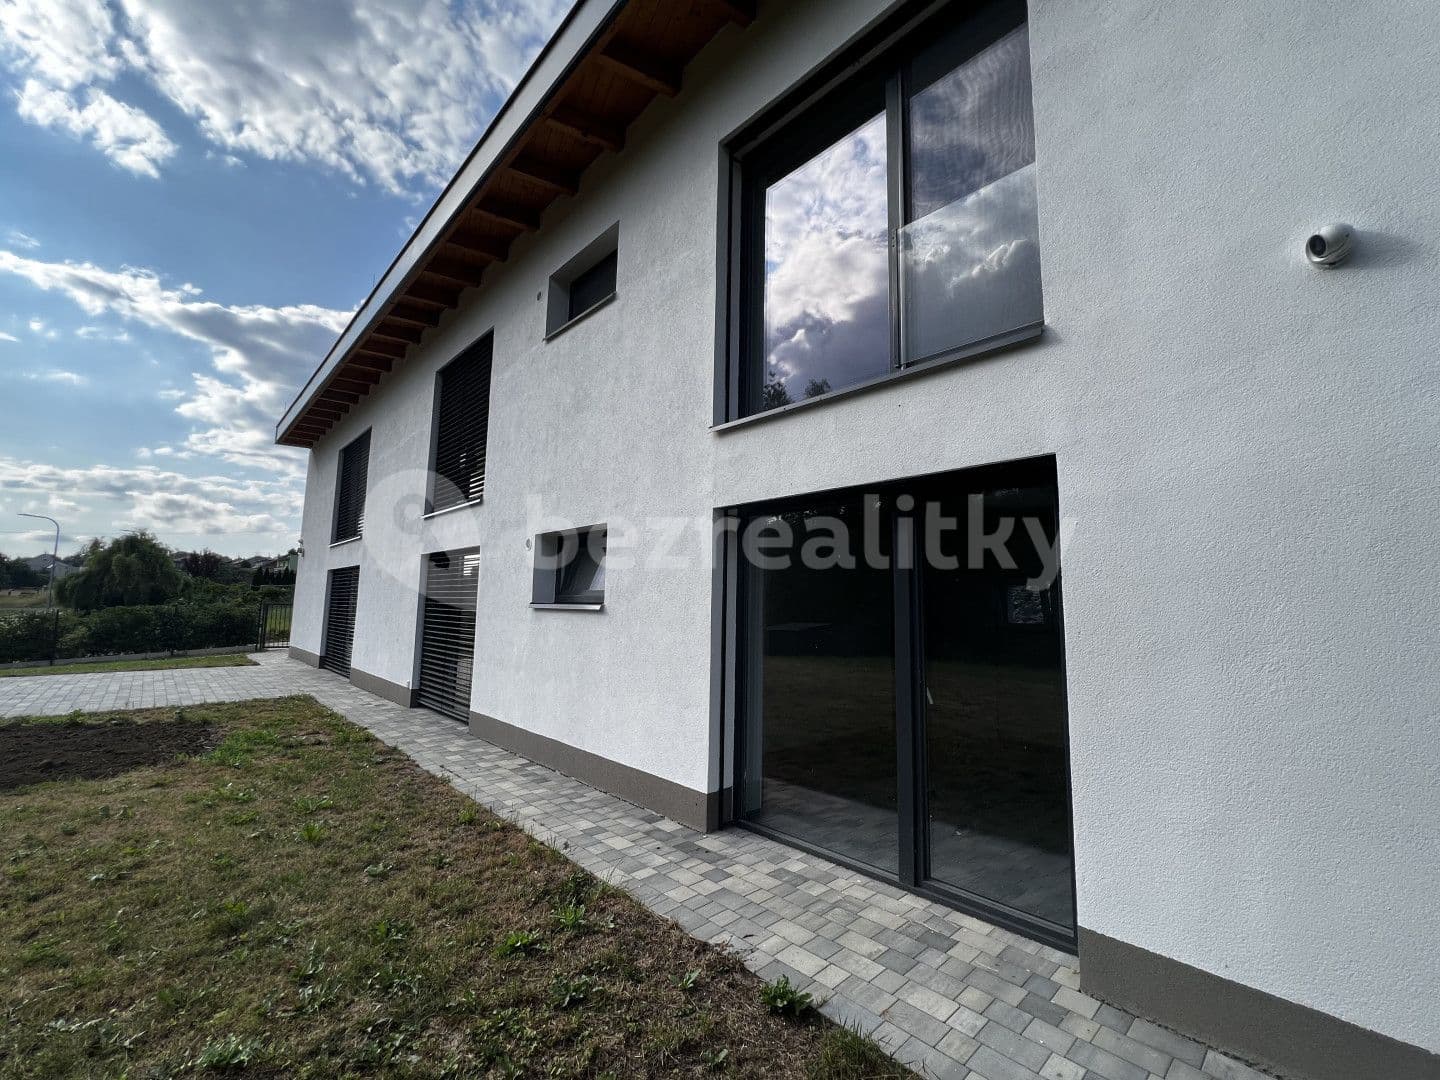 Predaj domu 186 m², pozemek 836 m², Finské domky, Ludgeřovice, Moravskoslezský kraj